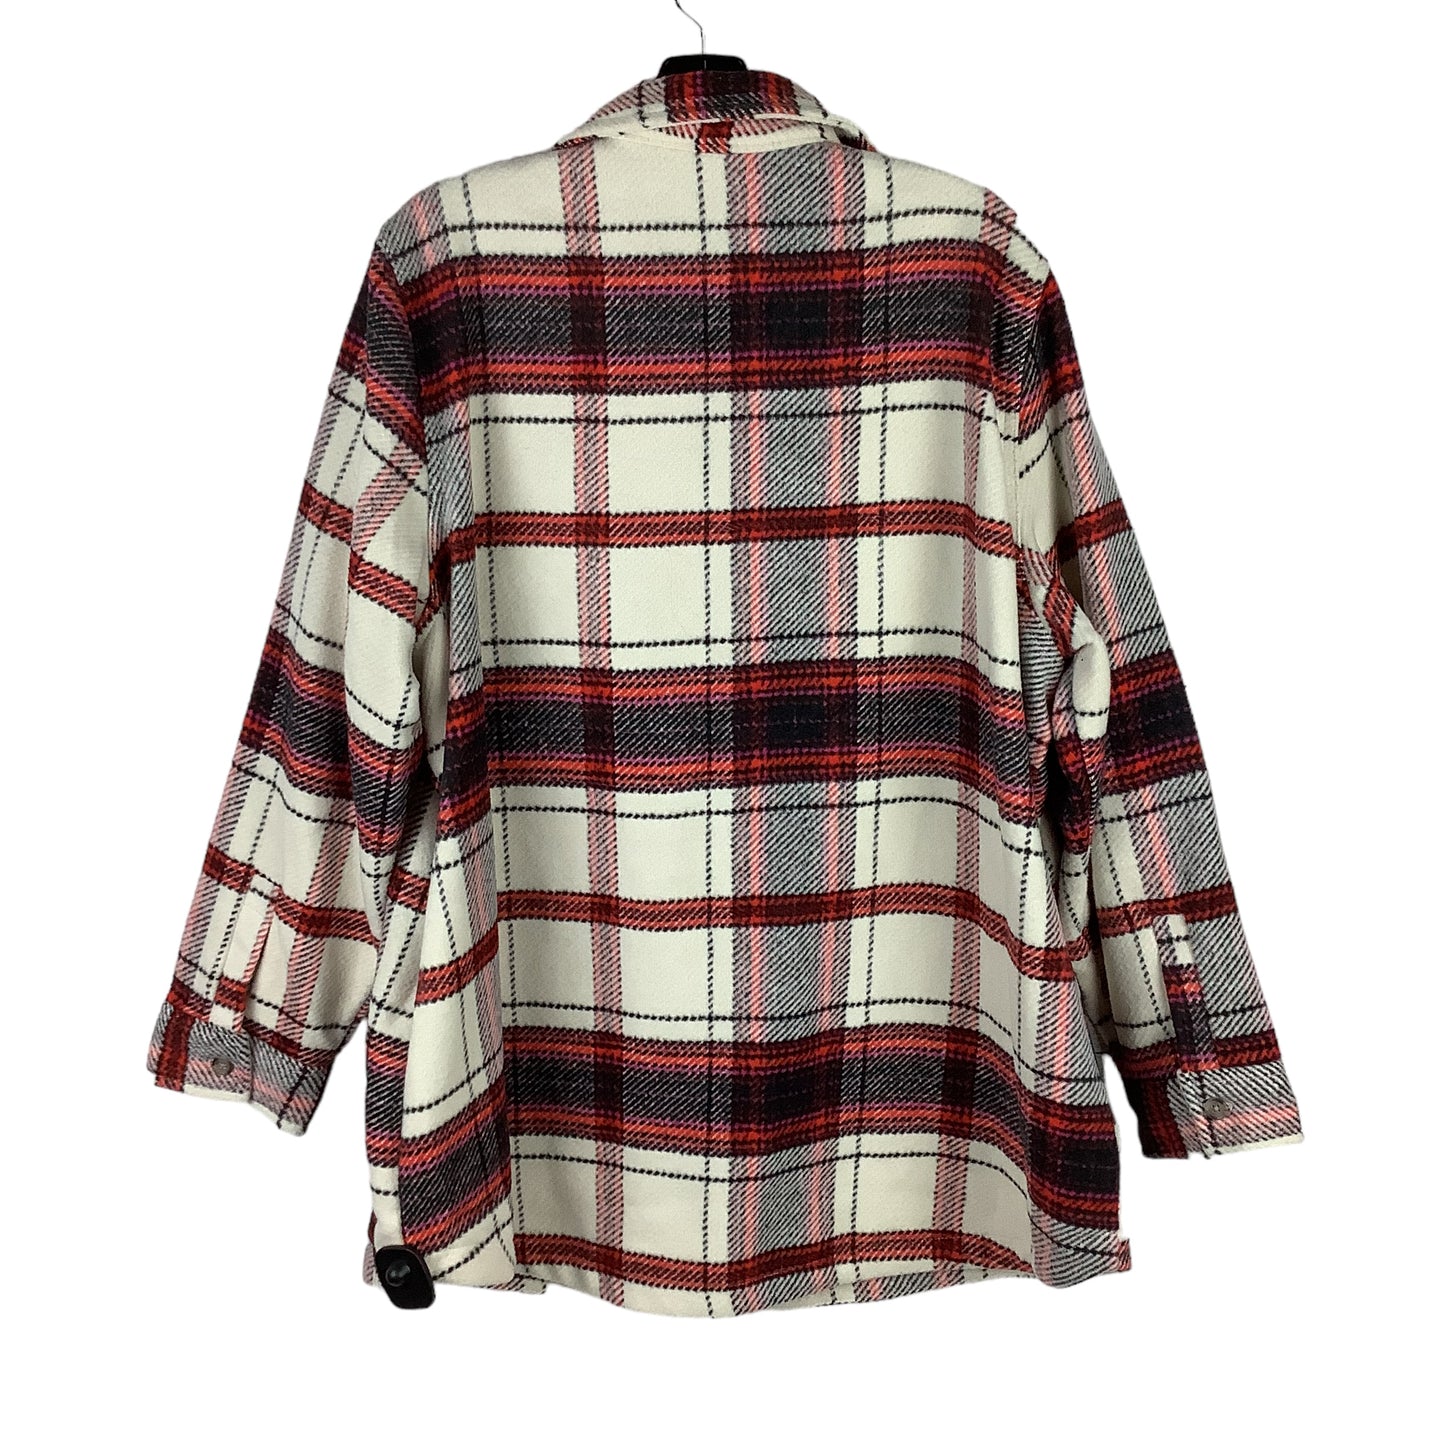 Jacket Fleece By Universal Thread  Size: Xxl